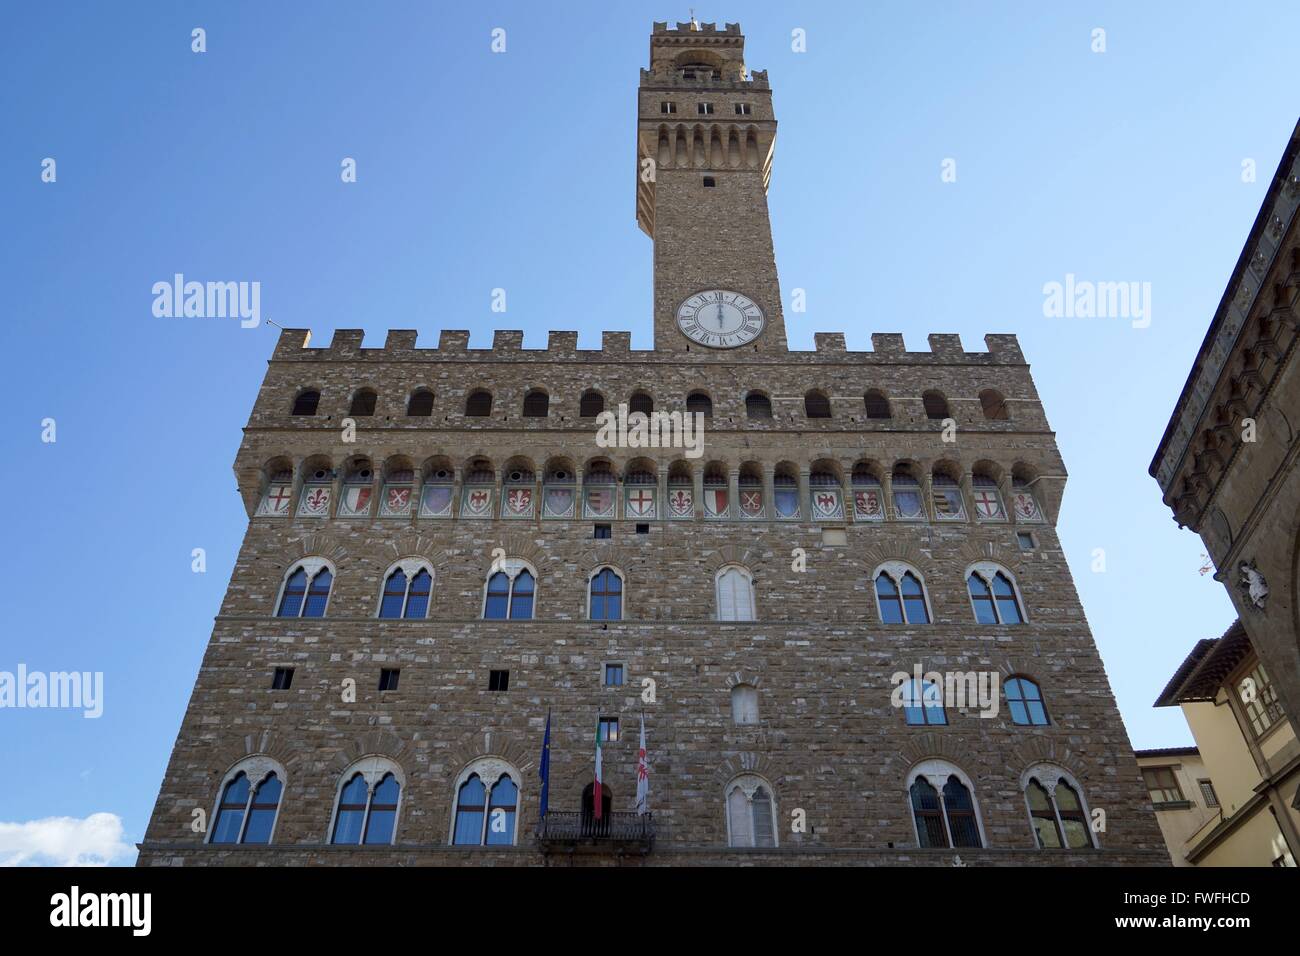 Italy: Palazzo Vecchio (town hall) at Piazza della Signoria in Florence. Photo from 20. February 2016. Stock Photo